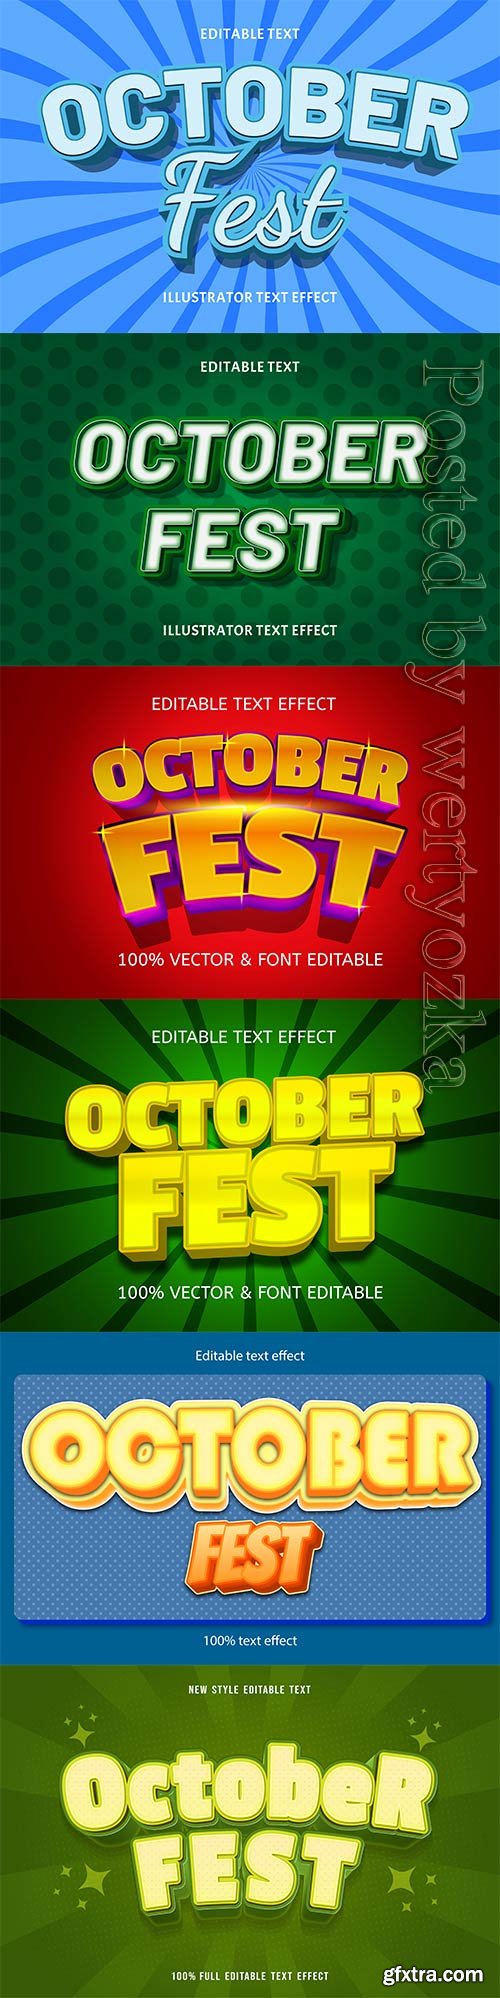 October fest editable text effect vol 6